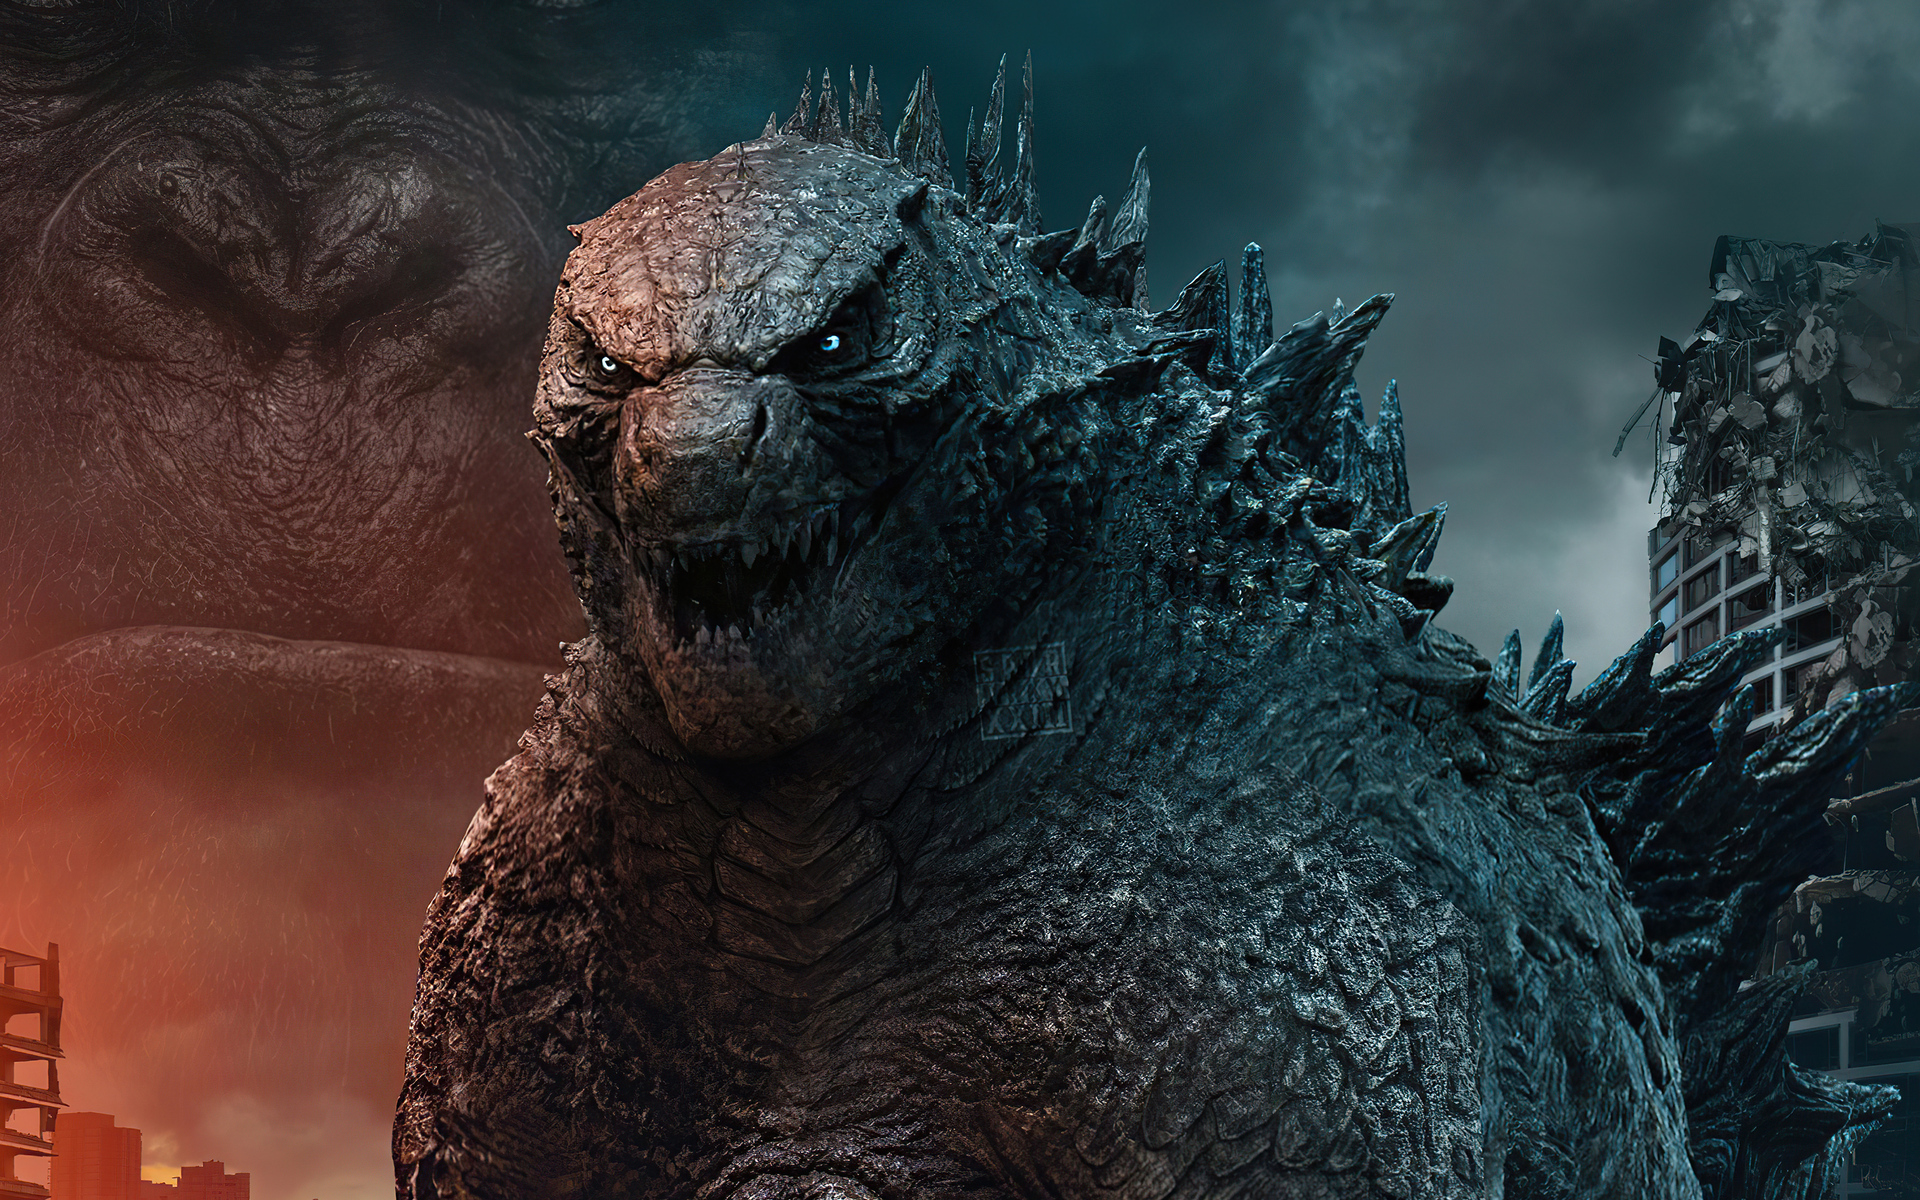 Godzilla Vs Kong Wallpaper 2021 4K : Godzilla vs Kong FanArt 2020 4K HD